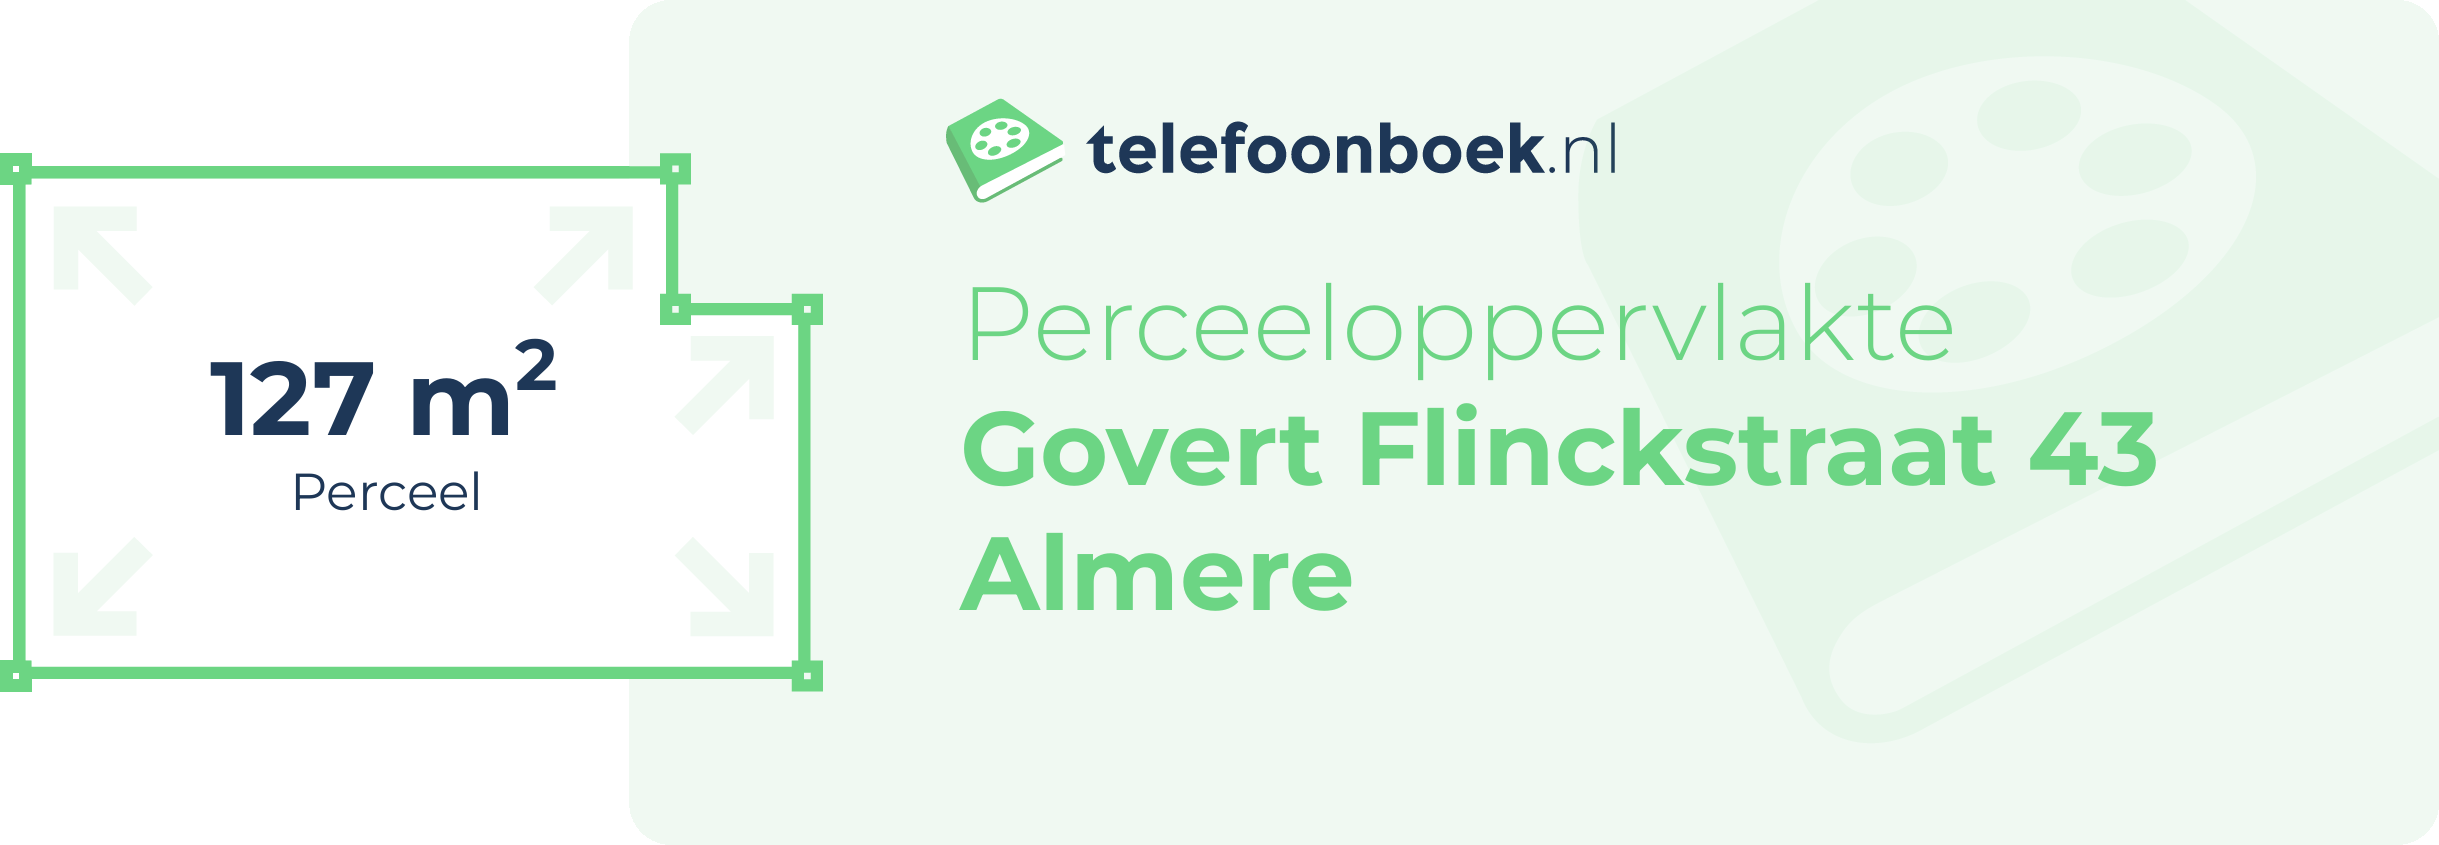 Perceeloppervlakte Govert Flinckstraat 43 Almere